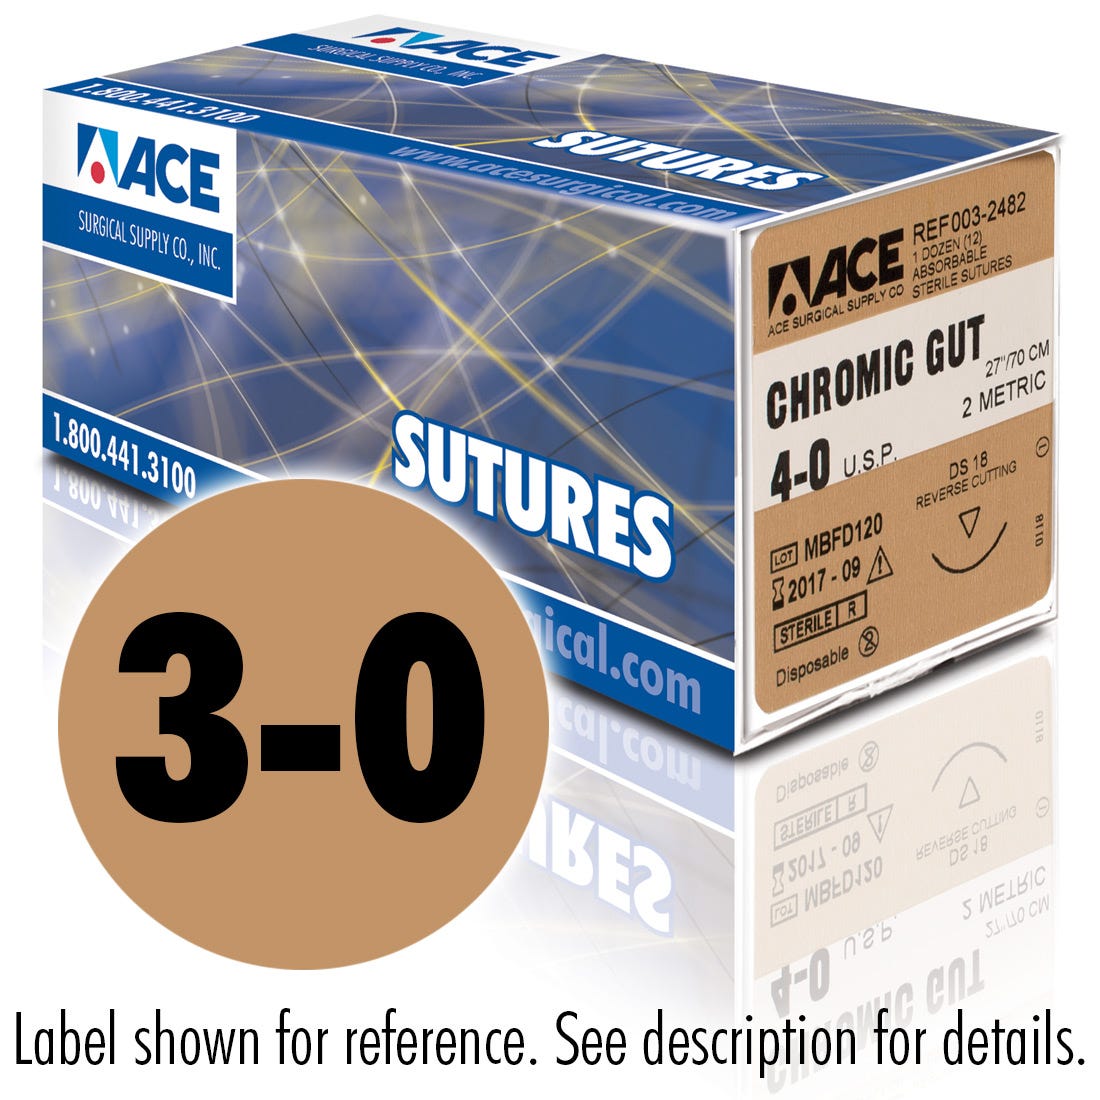 ACE 3-0 Chromic Gut Sutures, DS24, 30", 12Box